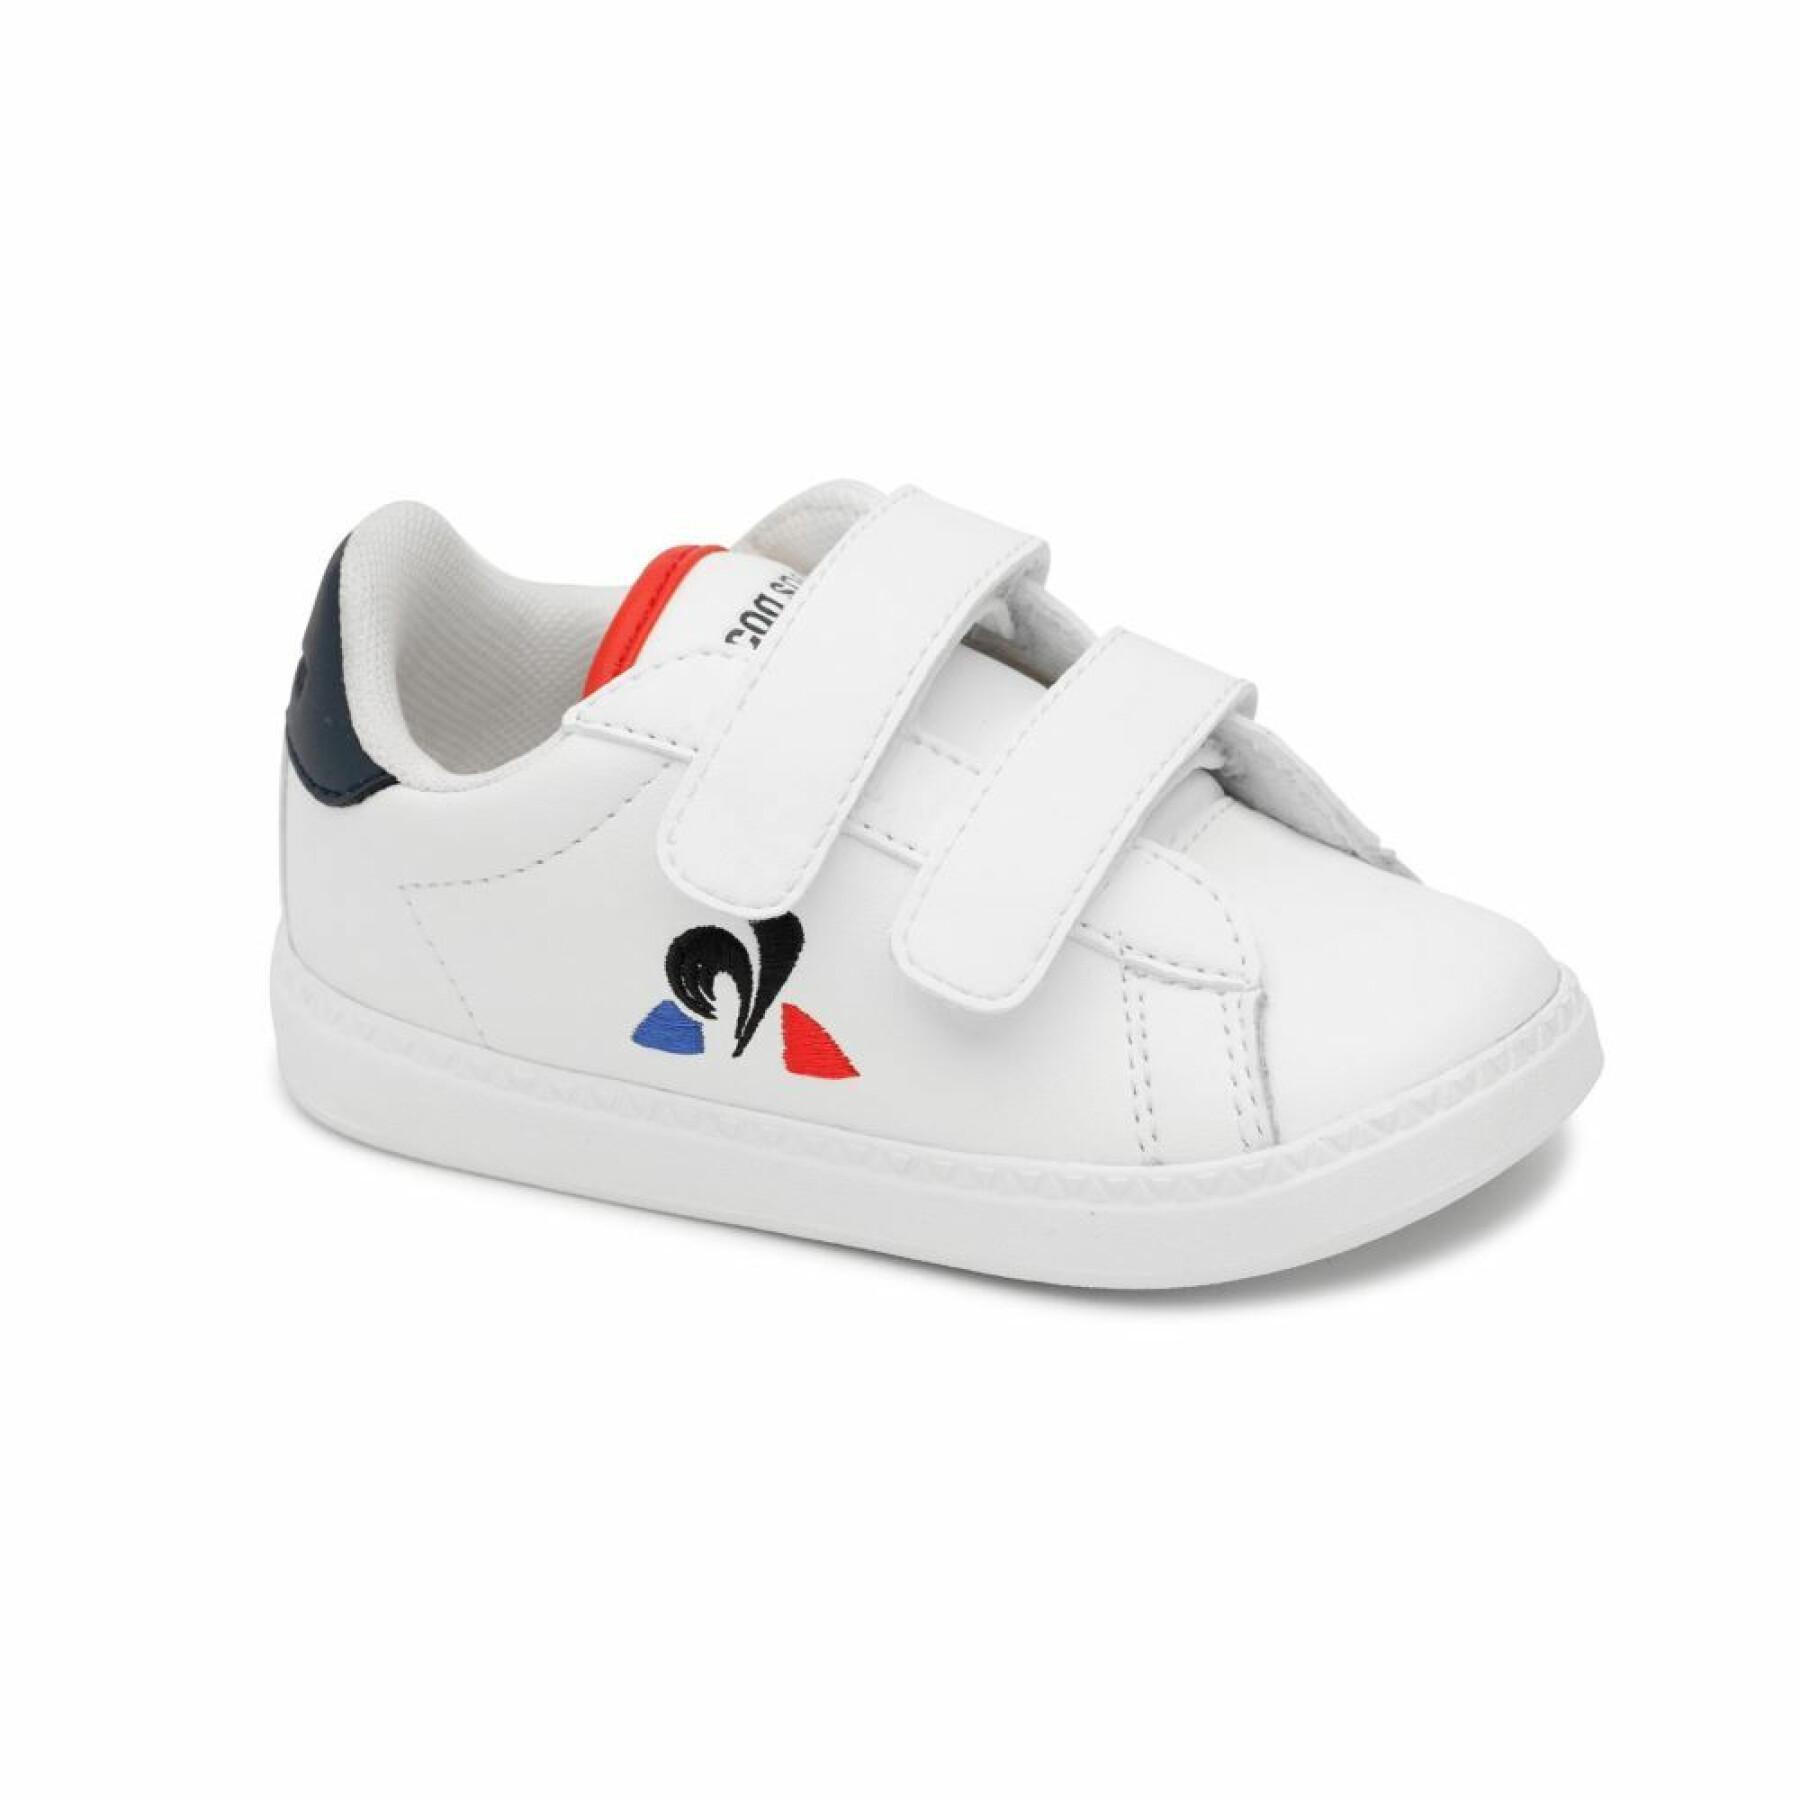 ik heb het gevonden virtueel jeugd Baby sneakers Le Coq Sportif Courtset Inf - Le Coq Sportif - Junior Sneakers  - Lifestyle